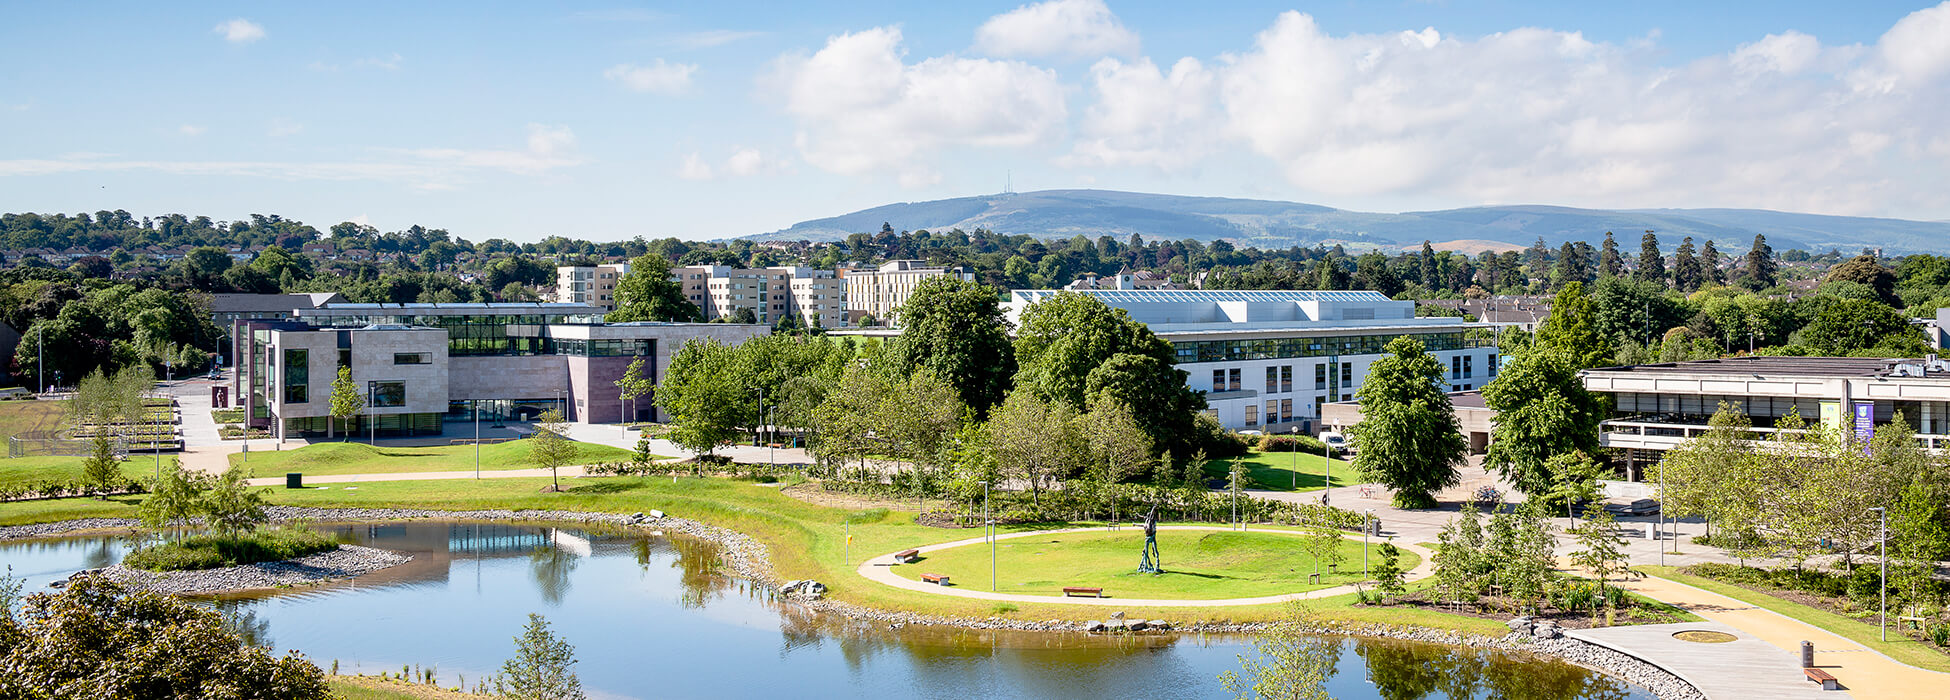 YuJa, Inc. Announces Agreement to Provide Ireland’s Largest University, University College Dublin, with Enterprise Video Platform Across Six Colleges